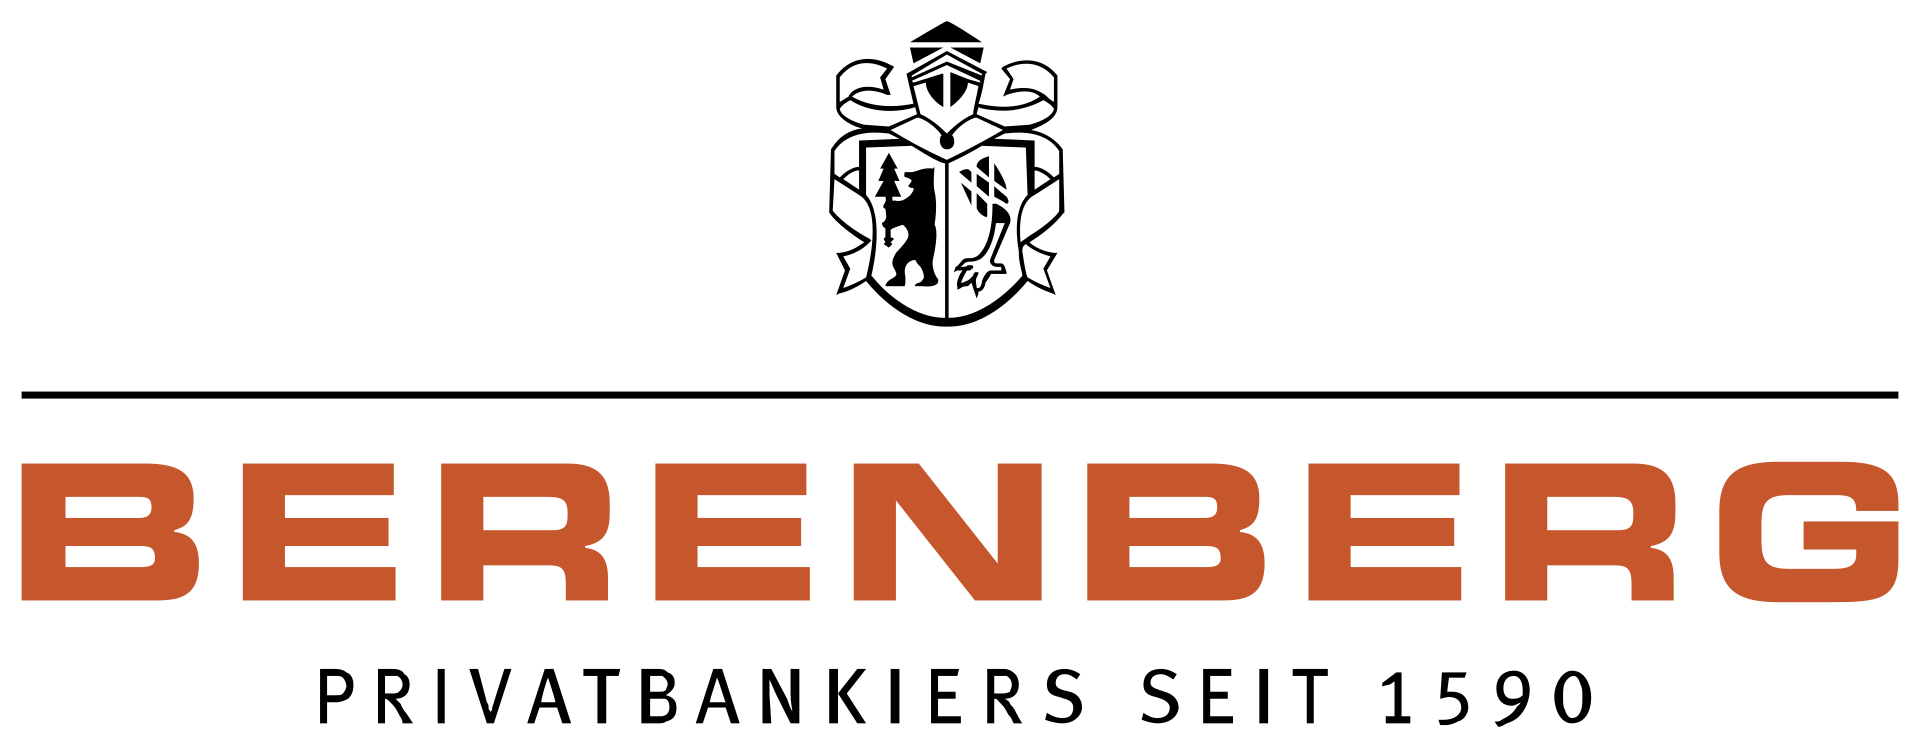 Berenberg_Bank_logo